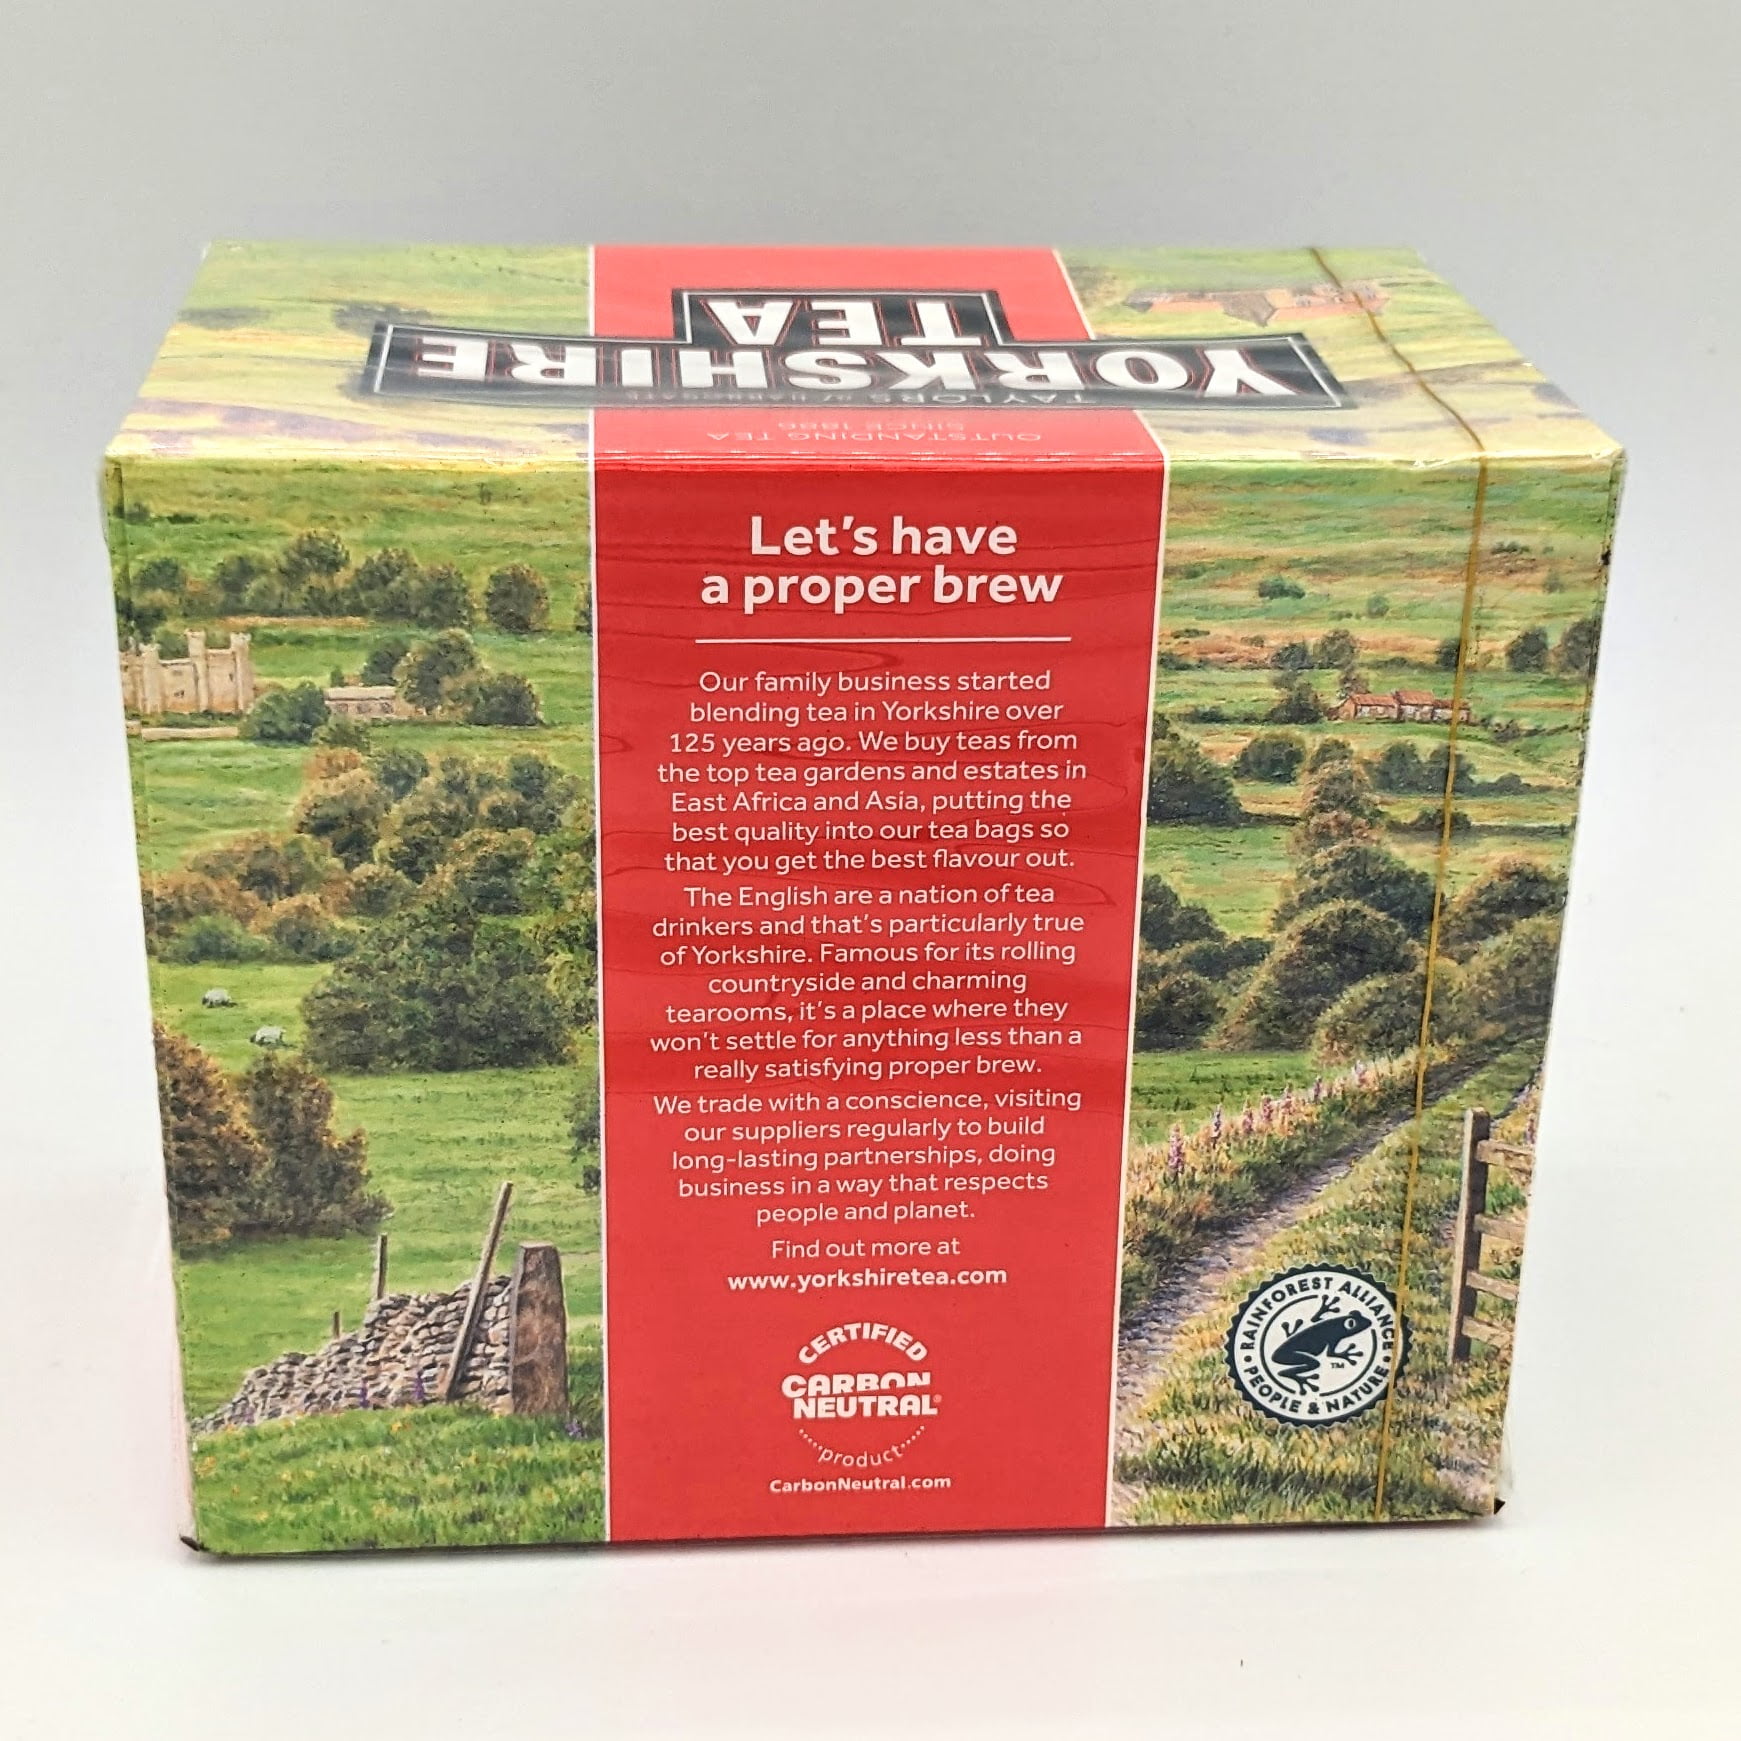 Yorkshire Tea - 80 teabags - British Food In Switzerland